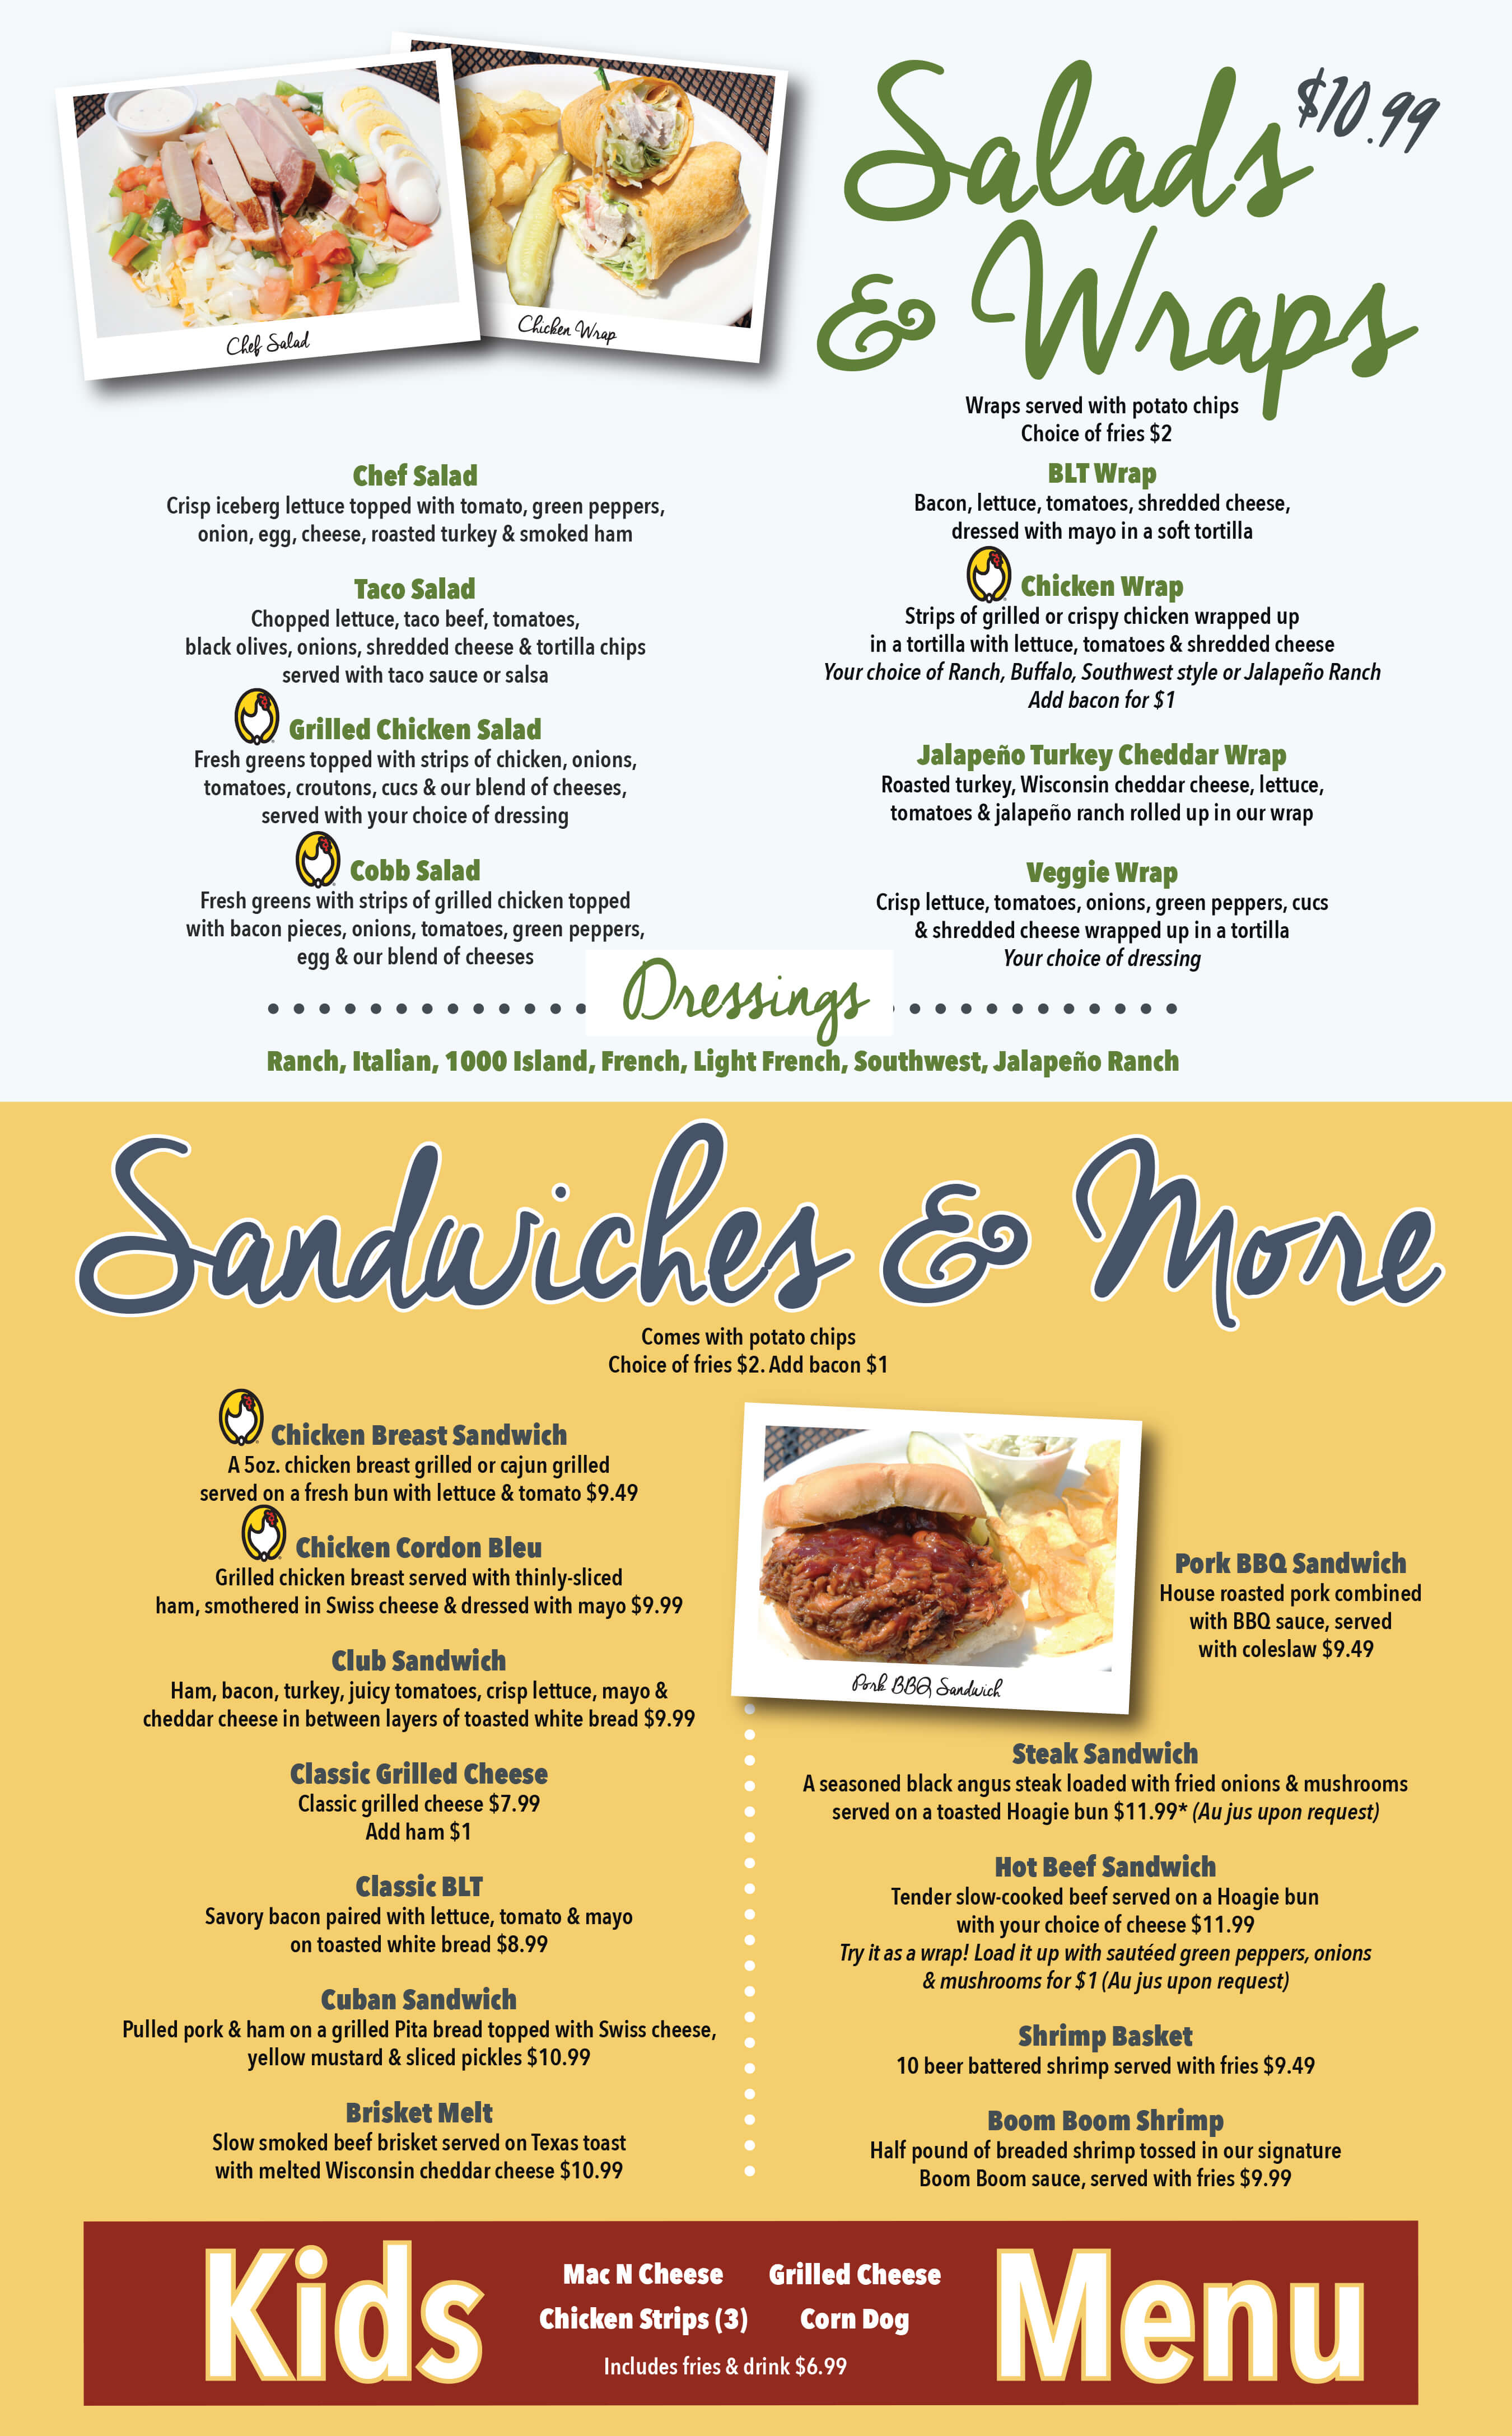 salads-wraps-sandwiches-kids-menu